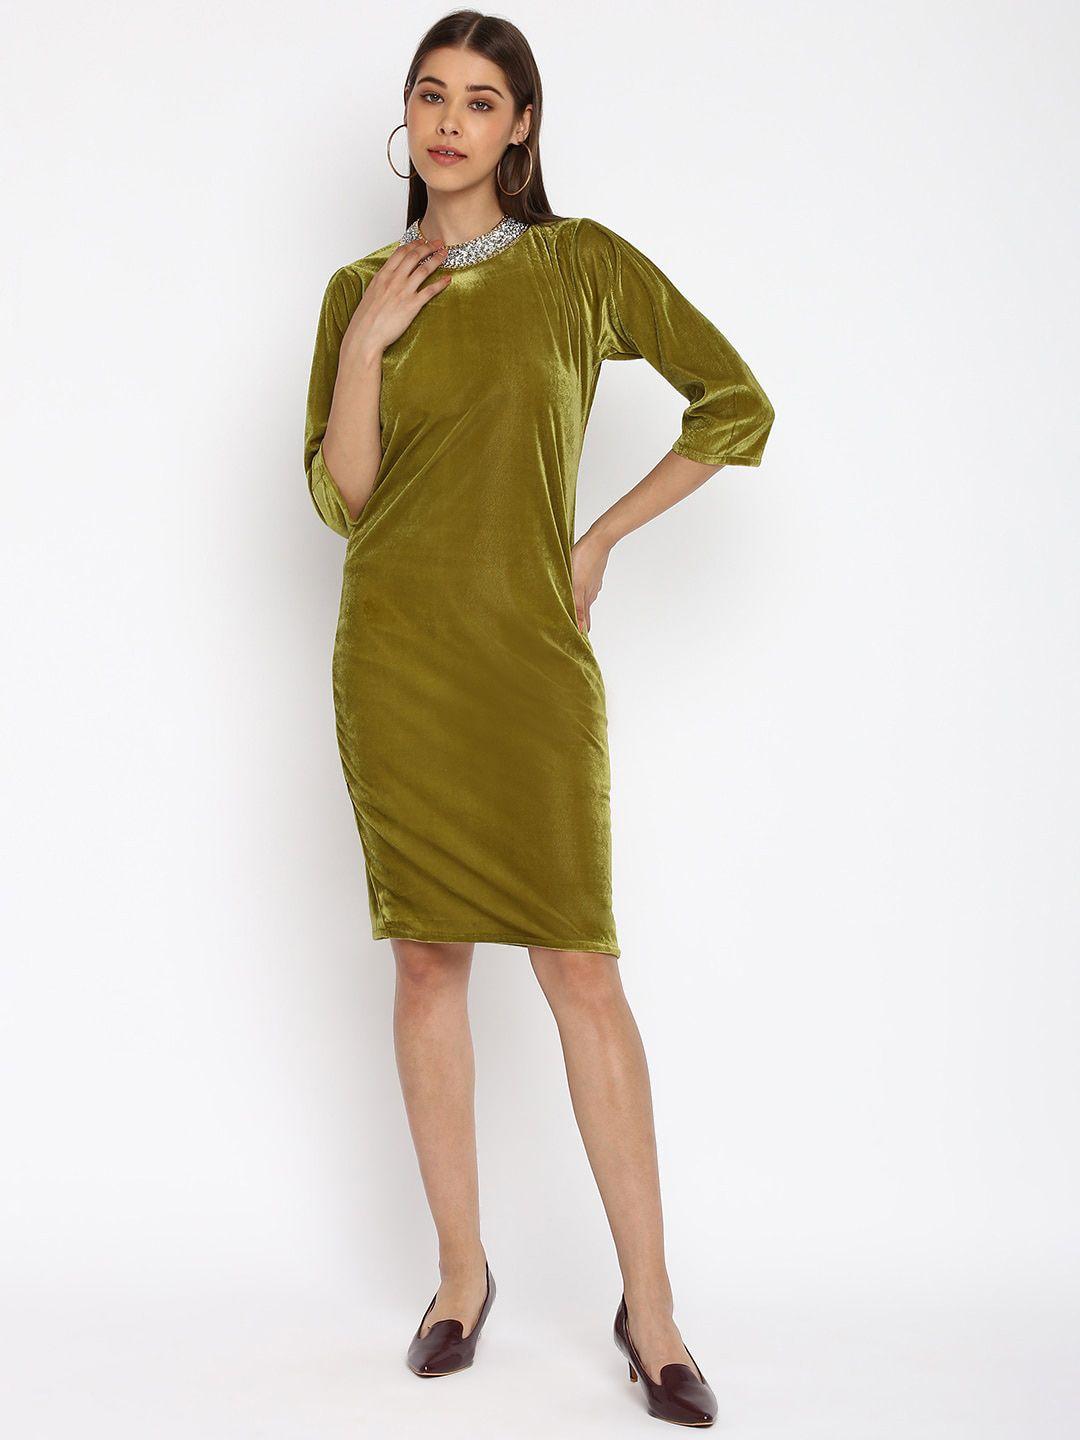 mayra olive green velvet sheath dress